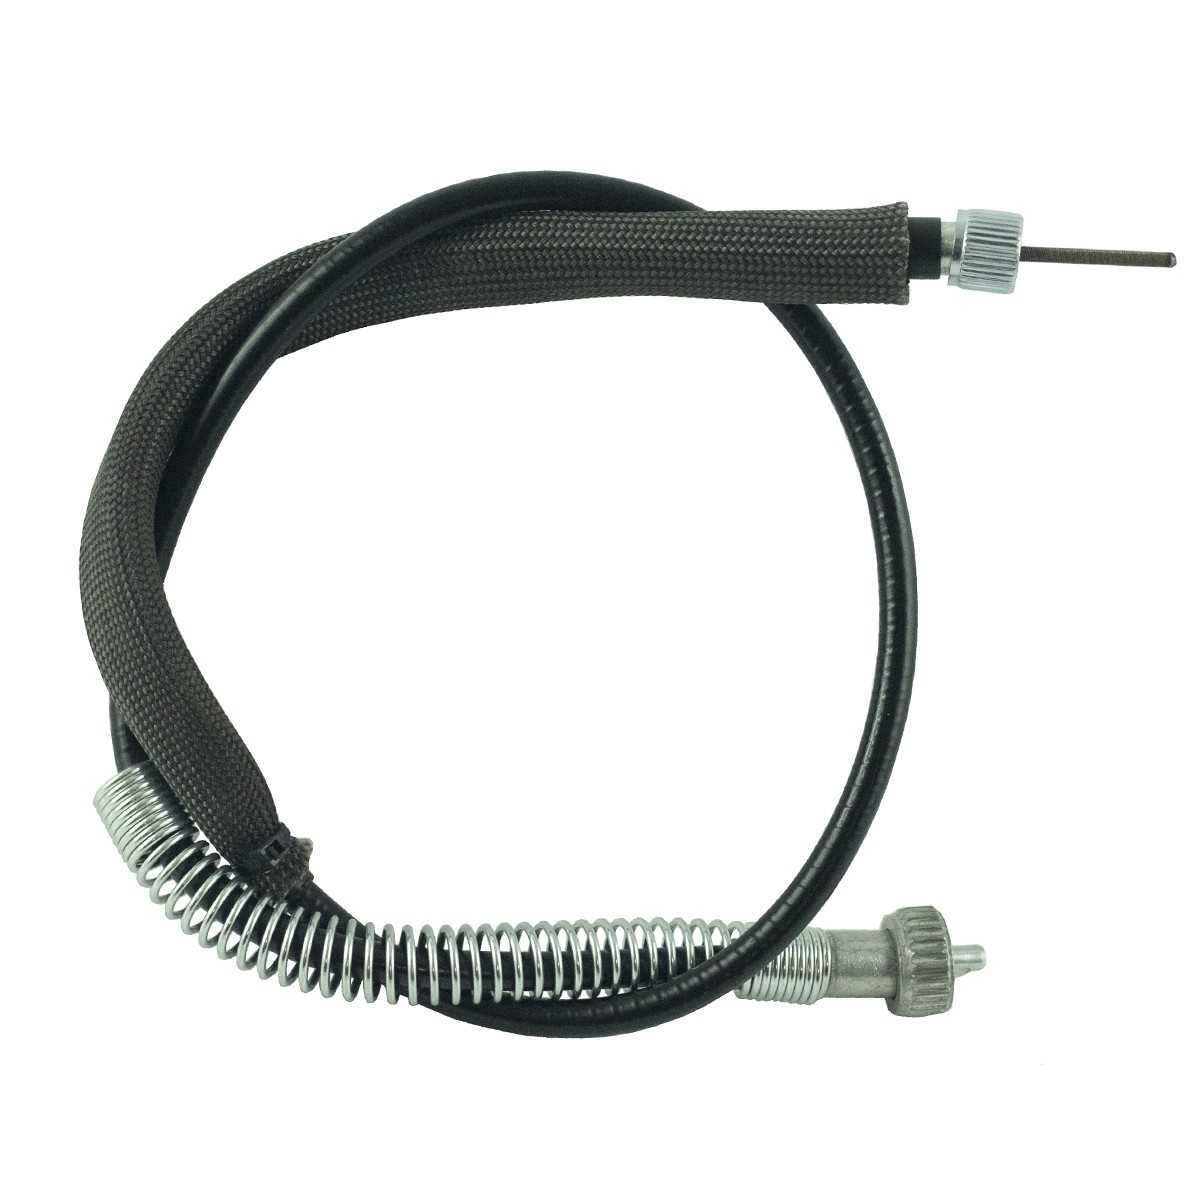 Cable tacómetro Hinomoto E / M10 x 1,5 / M14 x 1,5 / 6193-5163-001